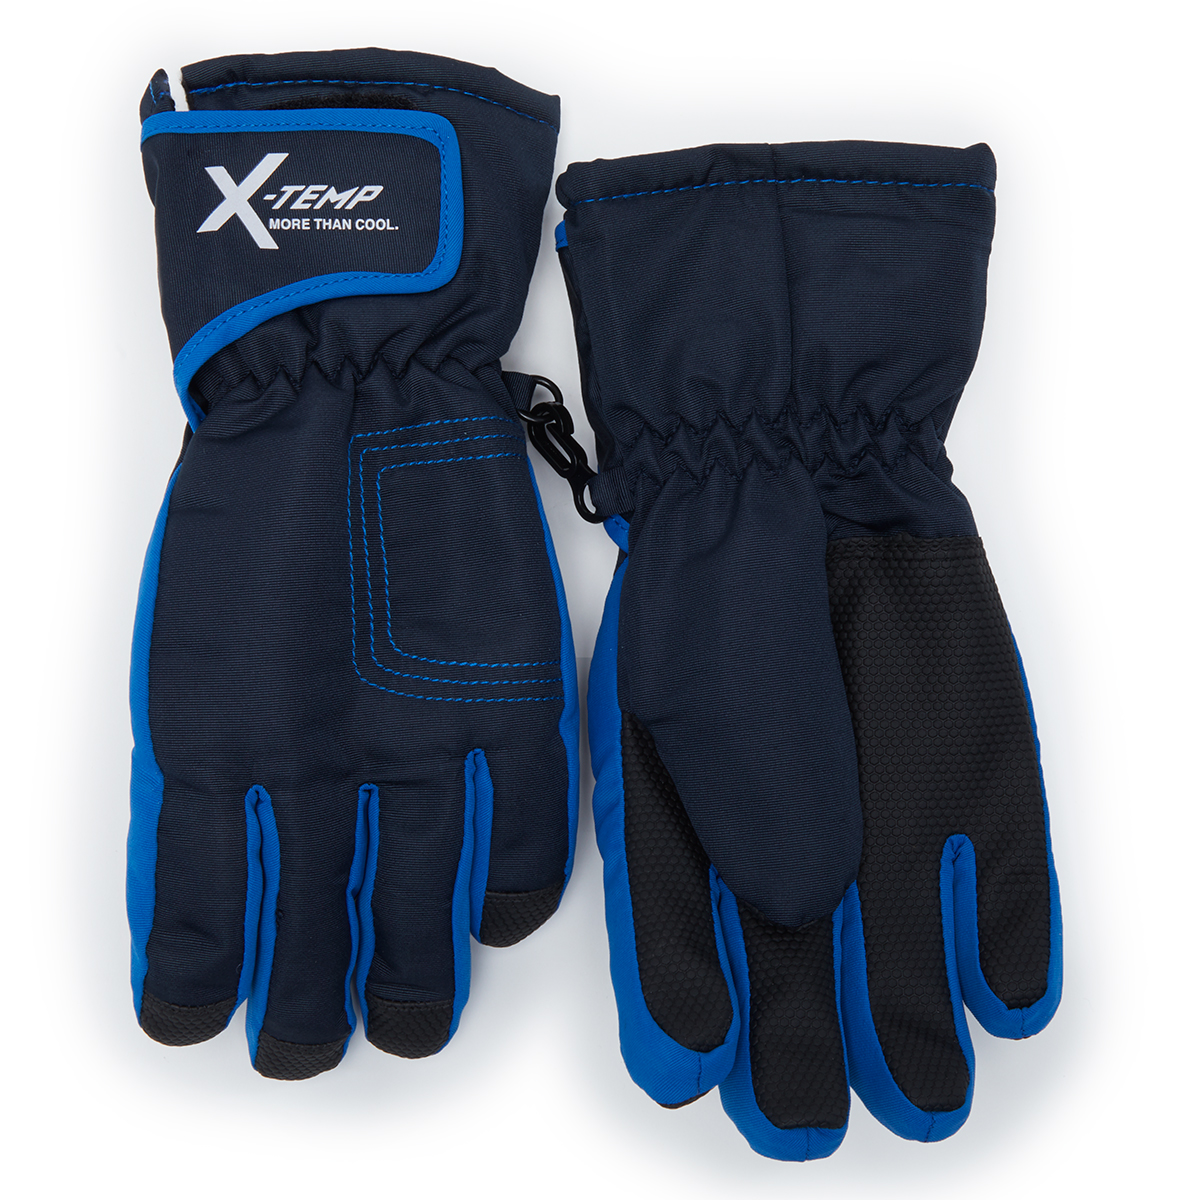 Hanes Boys' Ottoman Ski Gloves - Blue, S/M